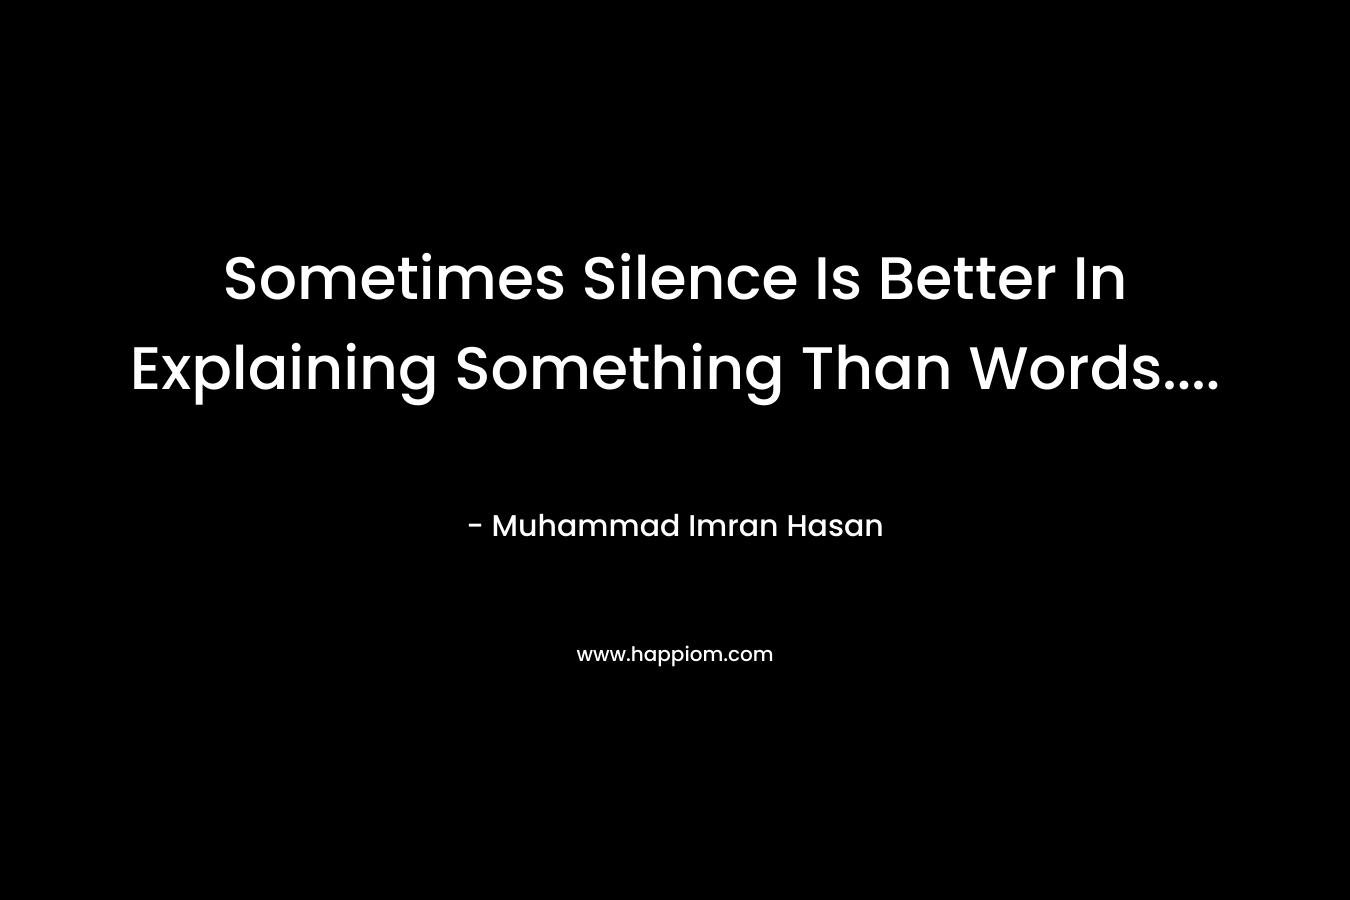 Sometimes Silence Is Better In Explaining Something Than Words....